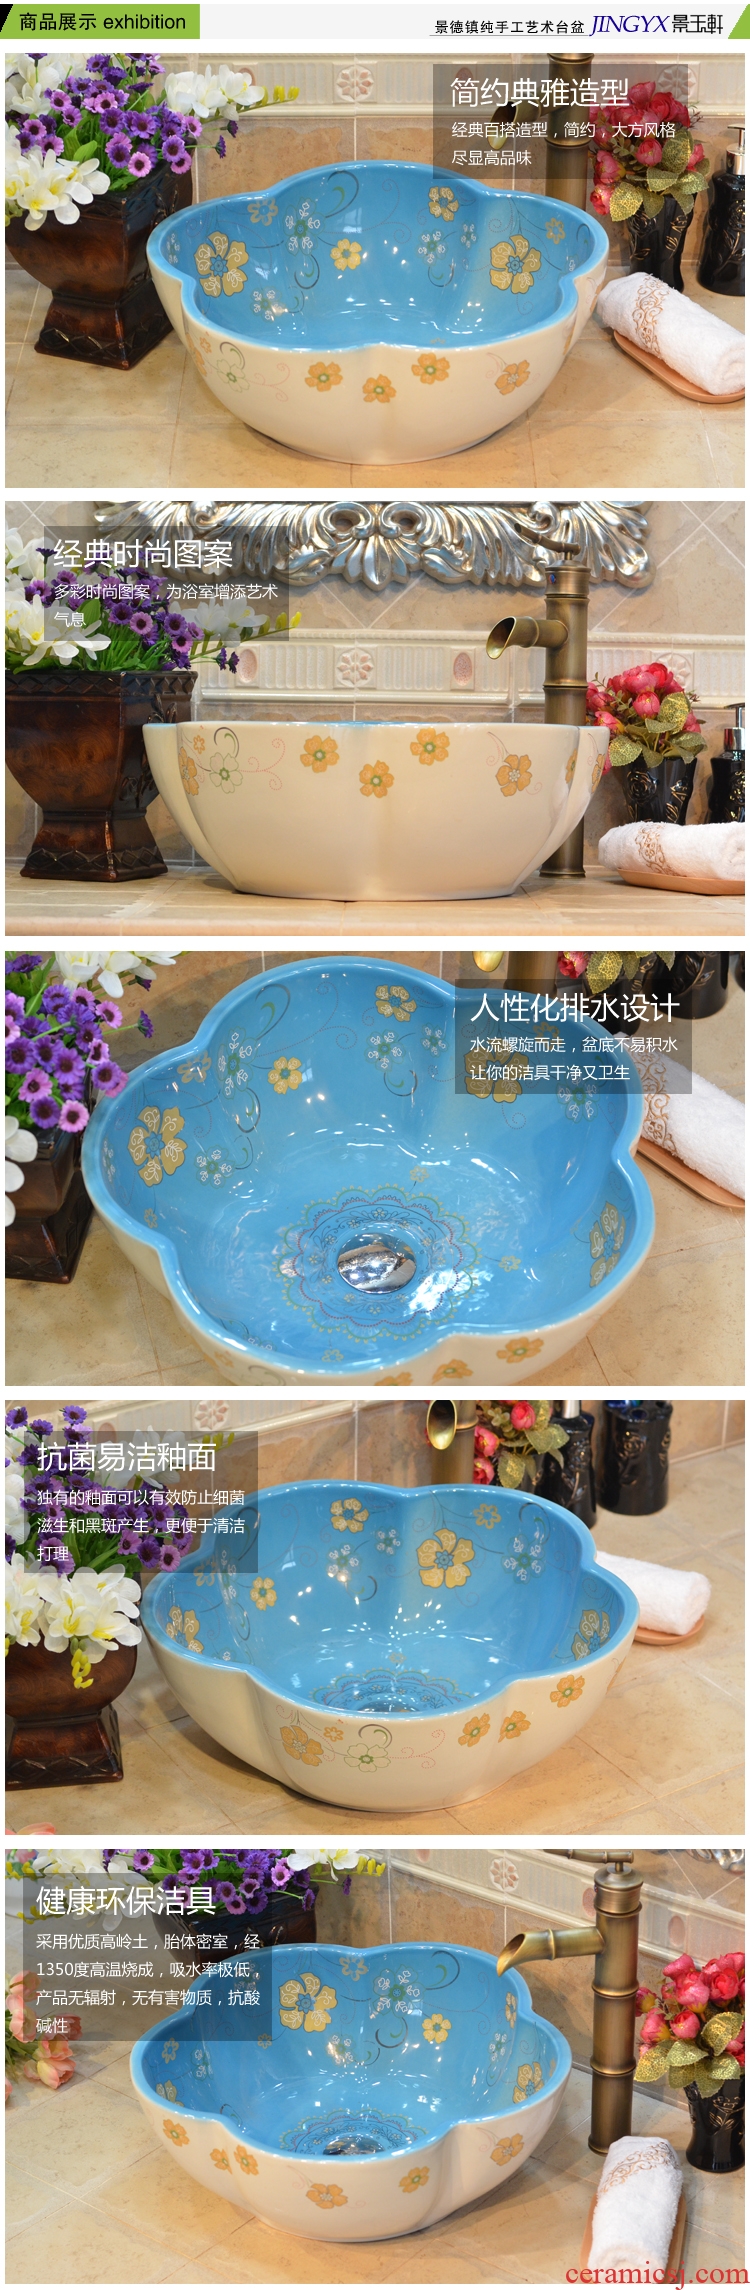 Jingdezhen ceramic art basin in blue and white cherry blossoms that defend bath torx stage basin sinks